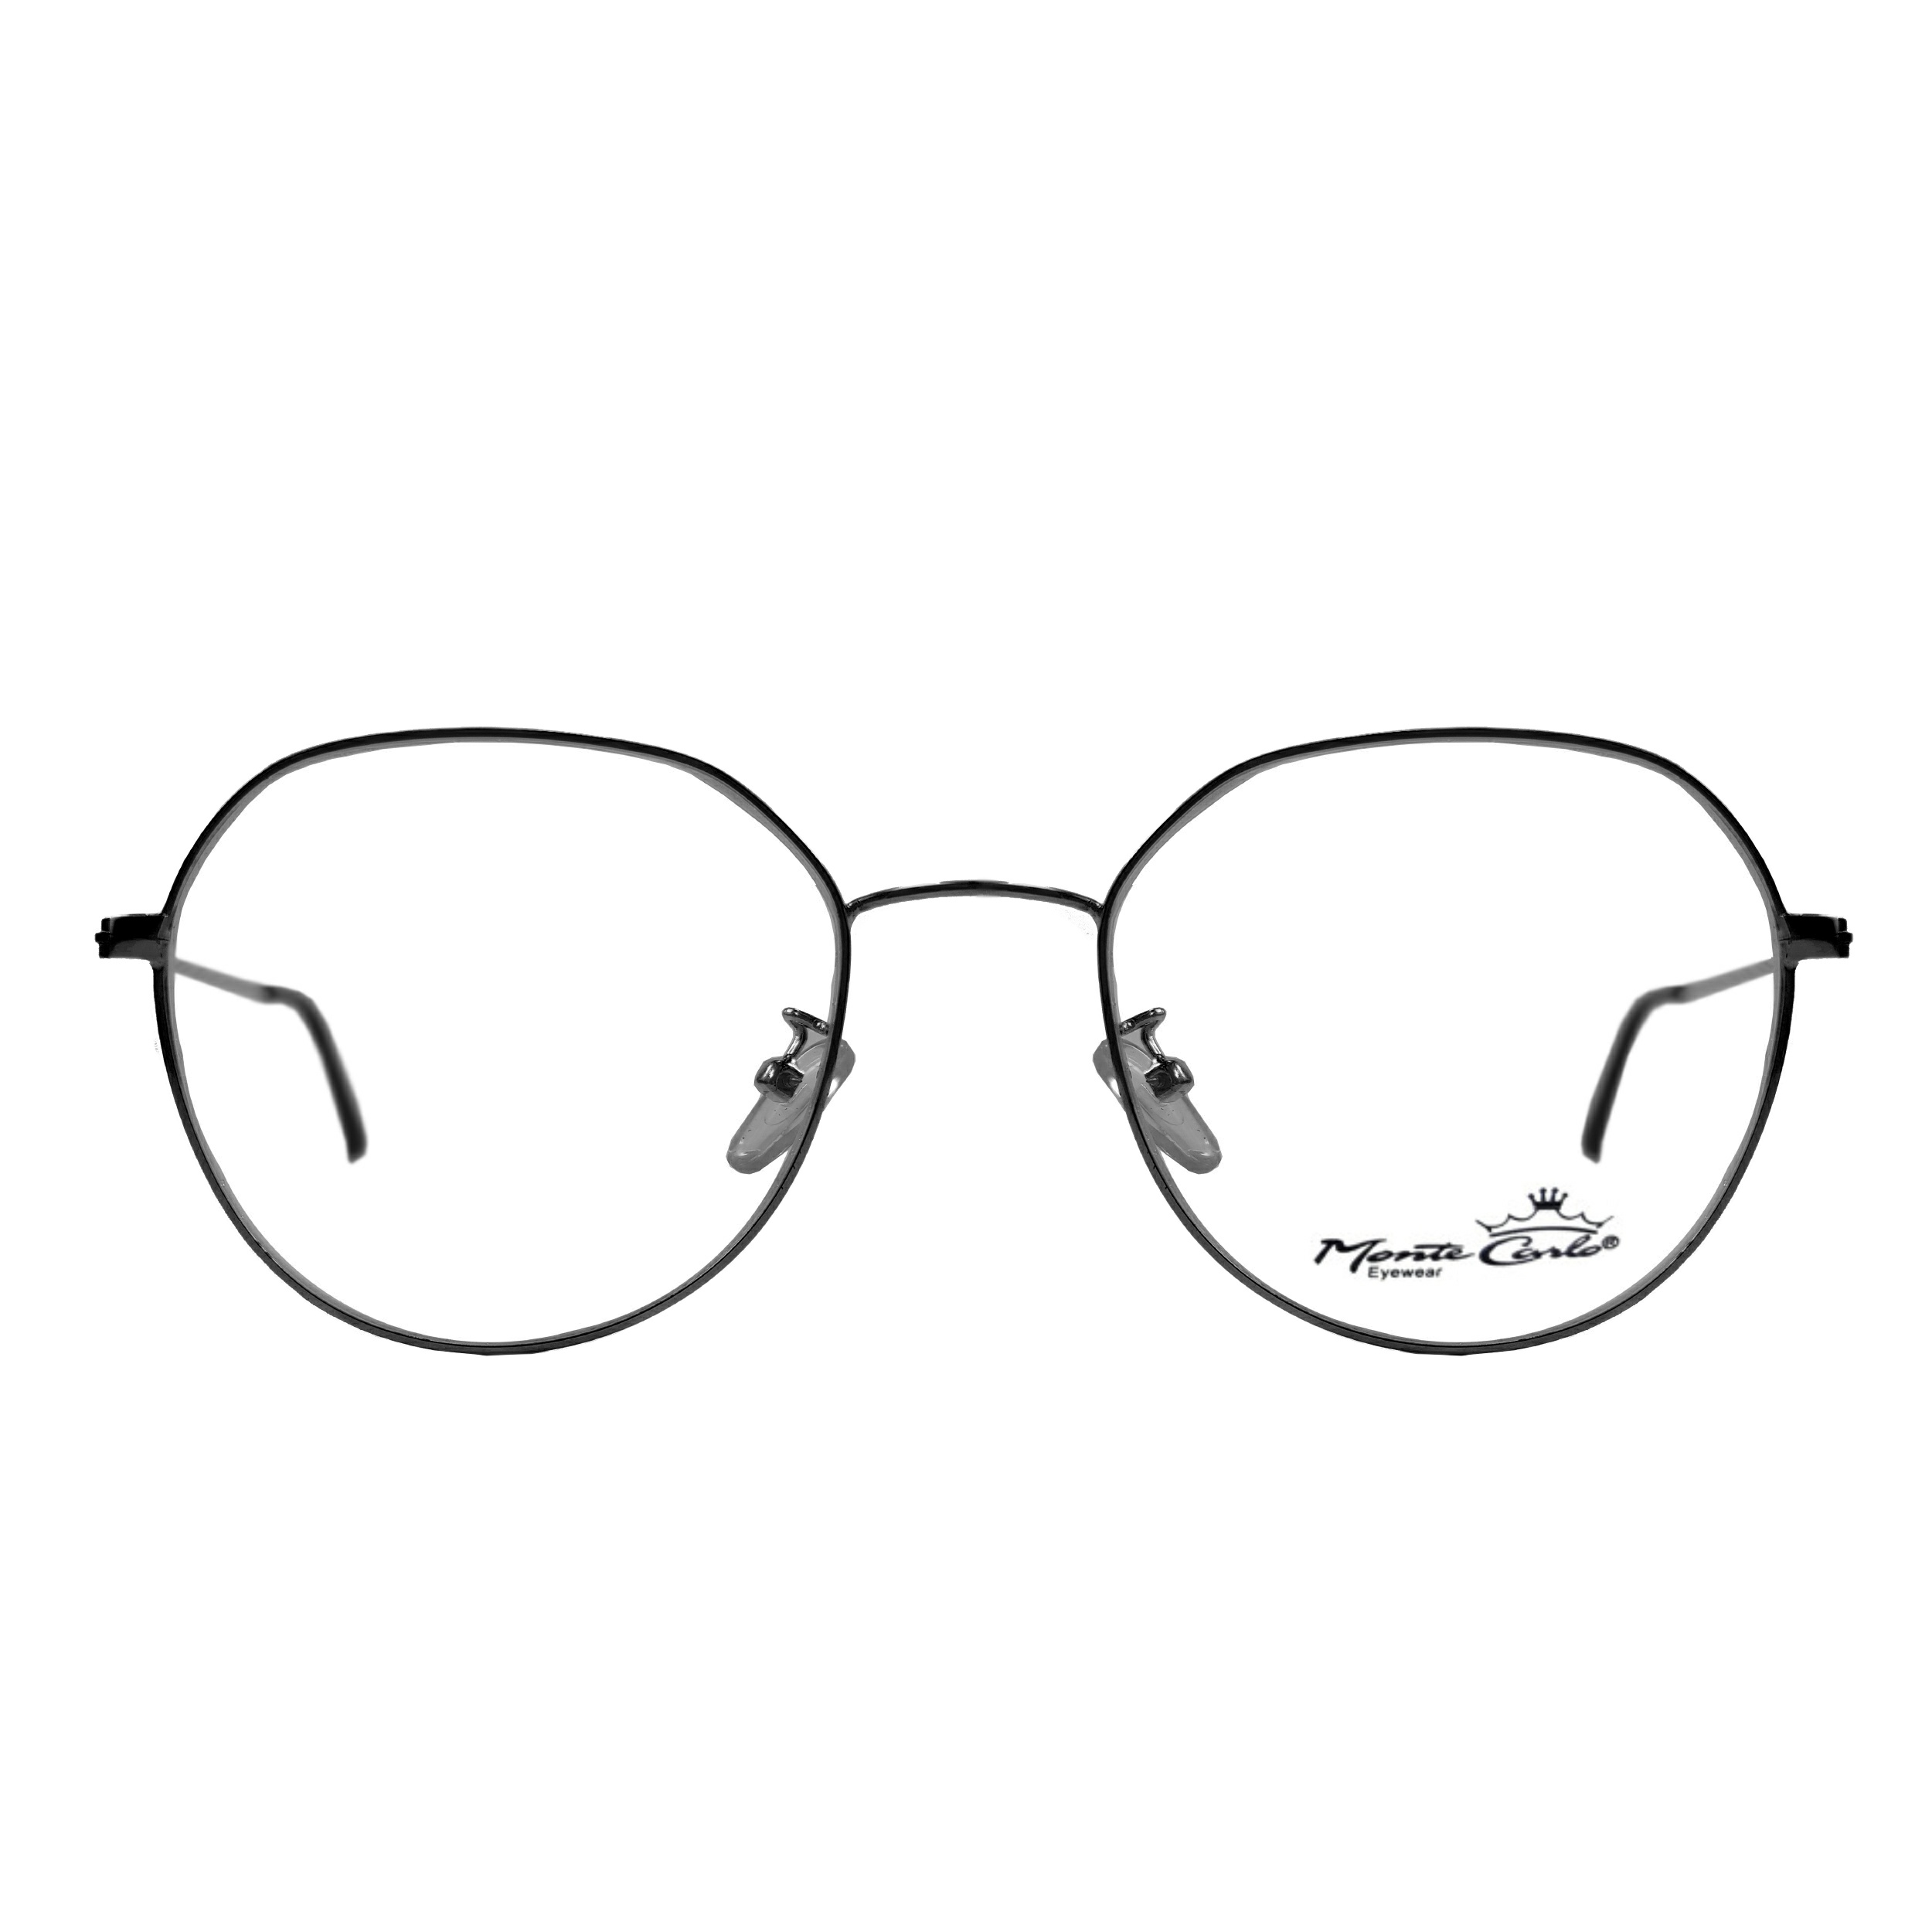 فریم عینک طبی مونته کارلو مدل 5960 کد 112